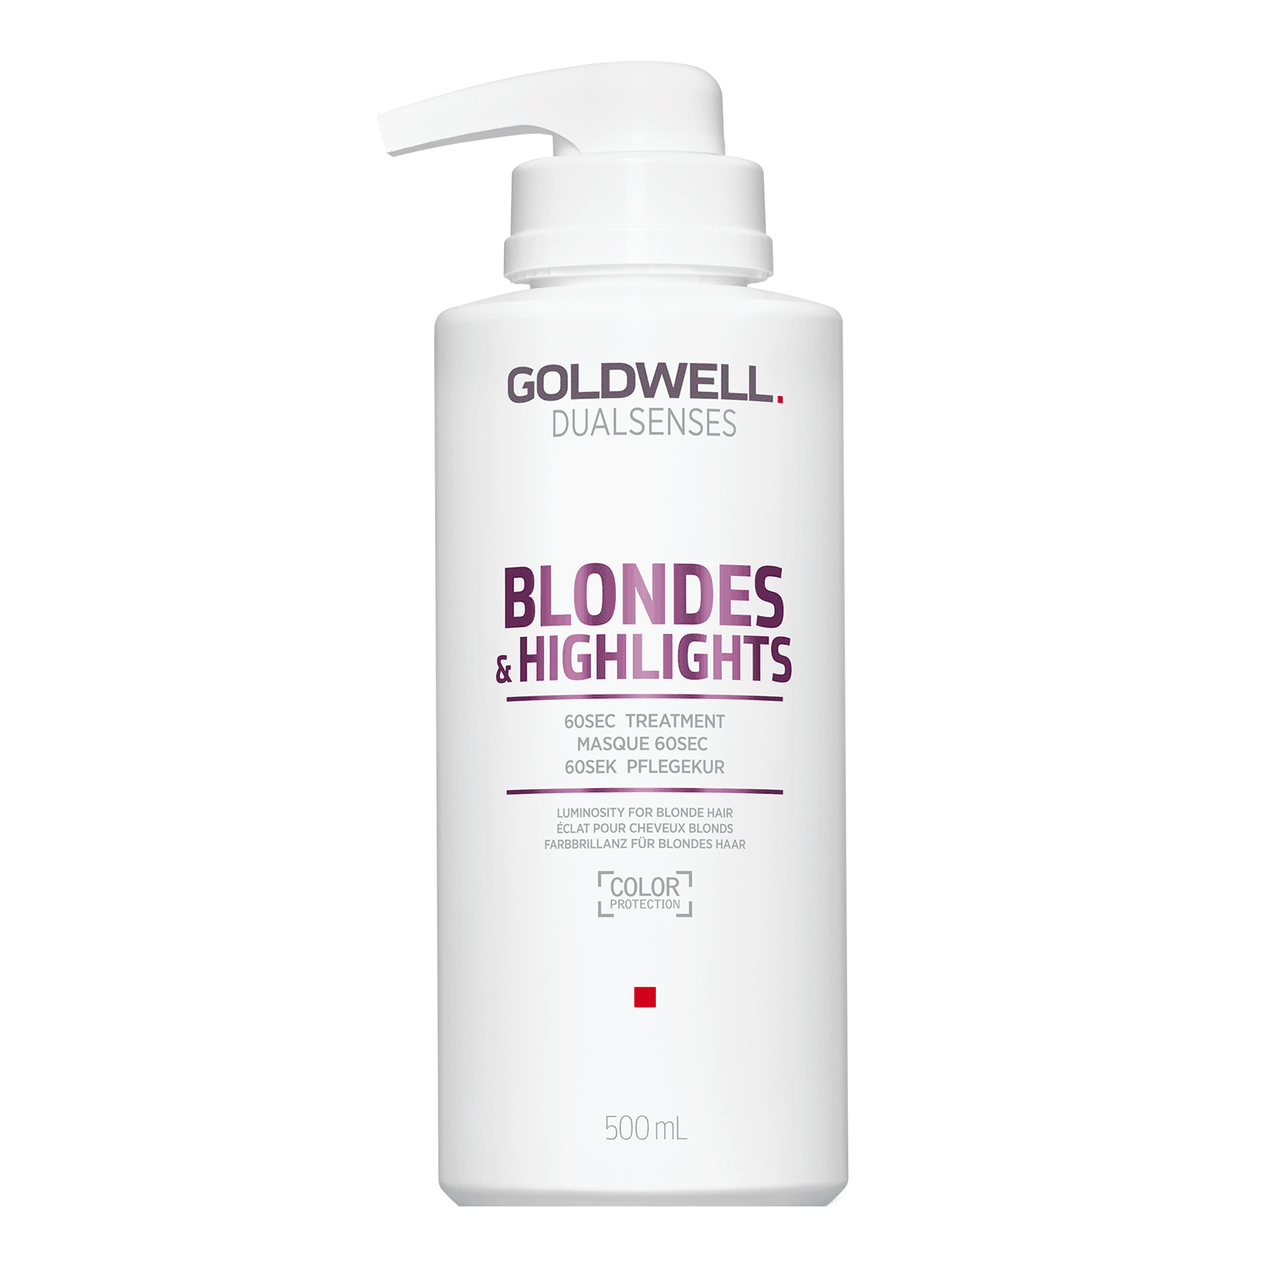 Goldwell  Dualsenses - Blonde & Highlights 60 Second Treatment 16.9 fl oz